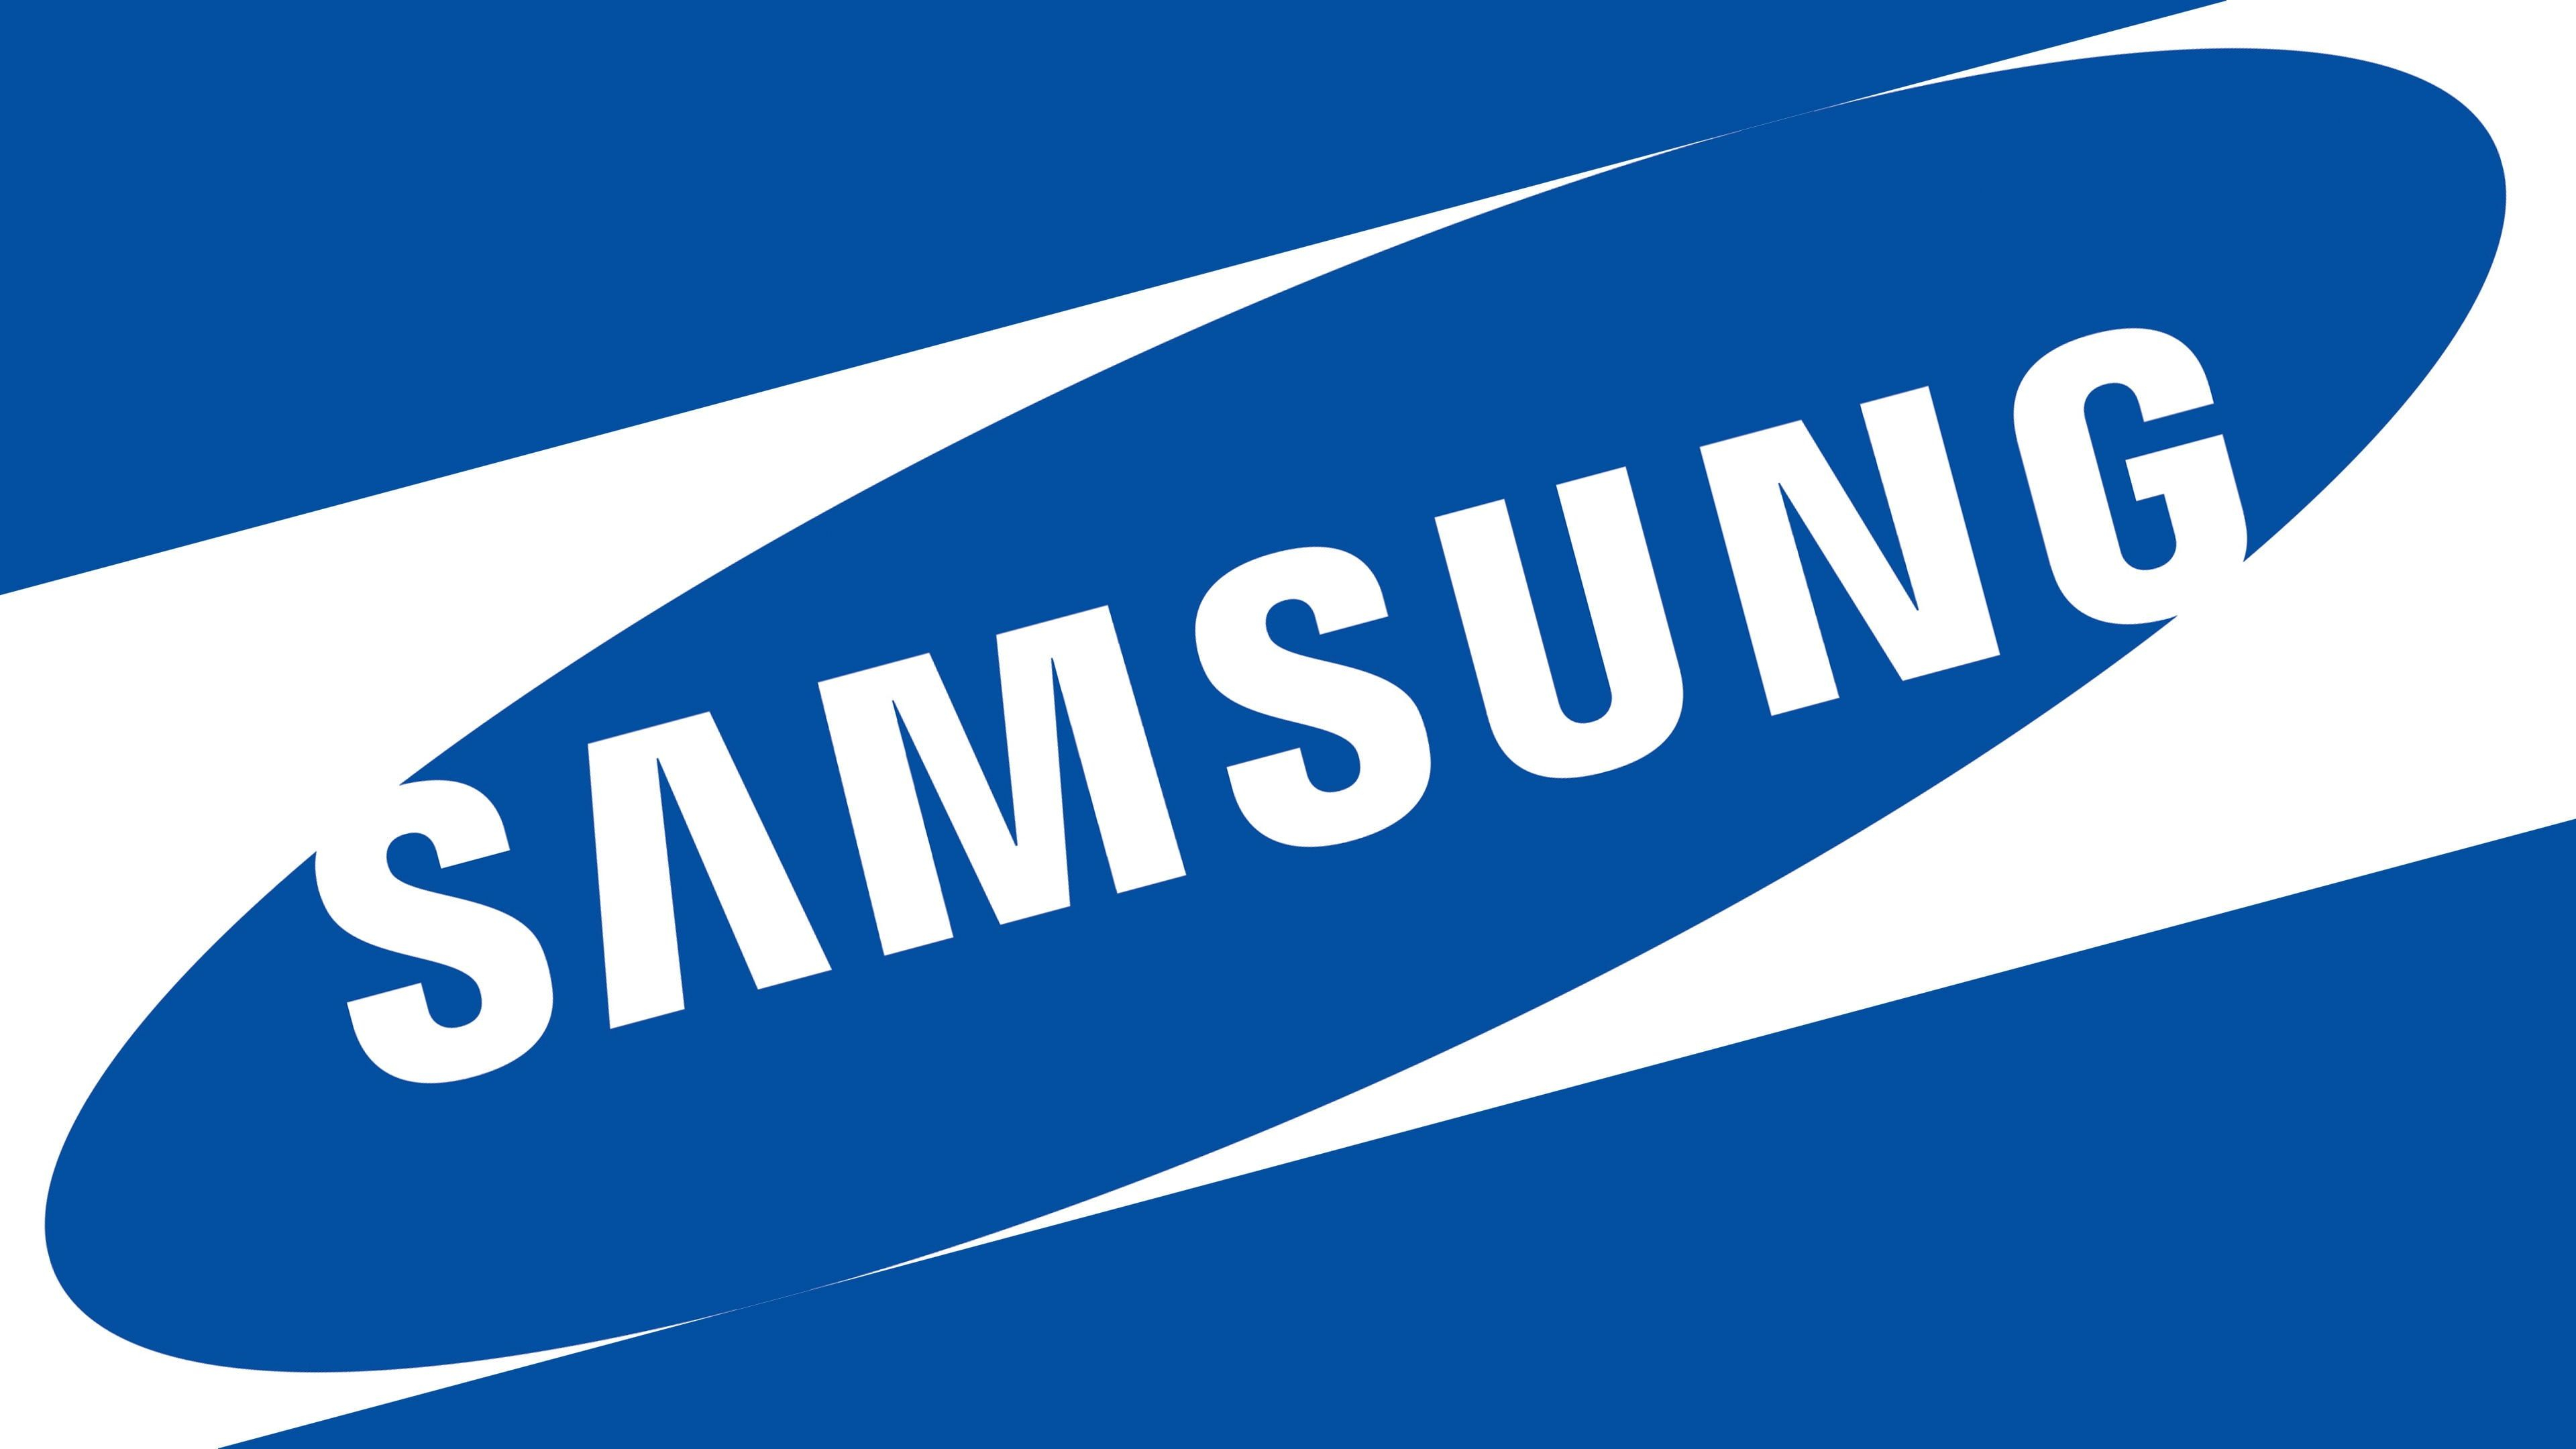 3840x2160 Samsung logo #Samsung #Logo #4K #wallpaper #hdwallpaper #desktop | Samsung logo, Samsung, Hd wallpaper